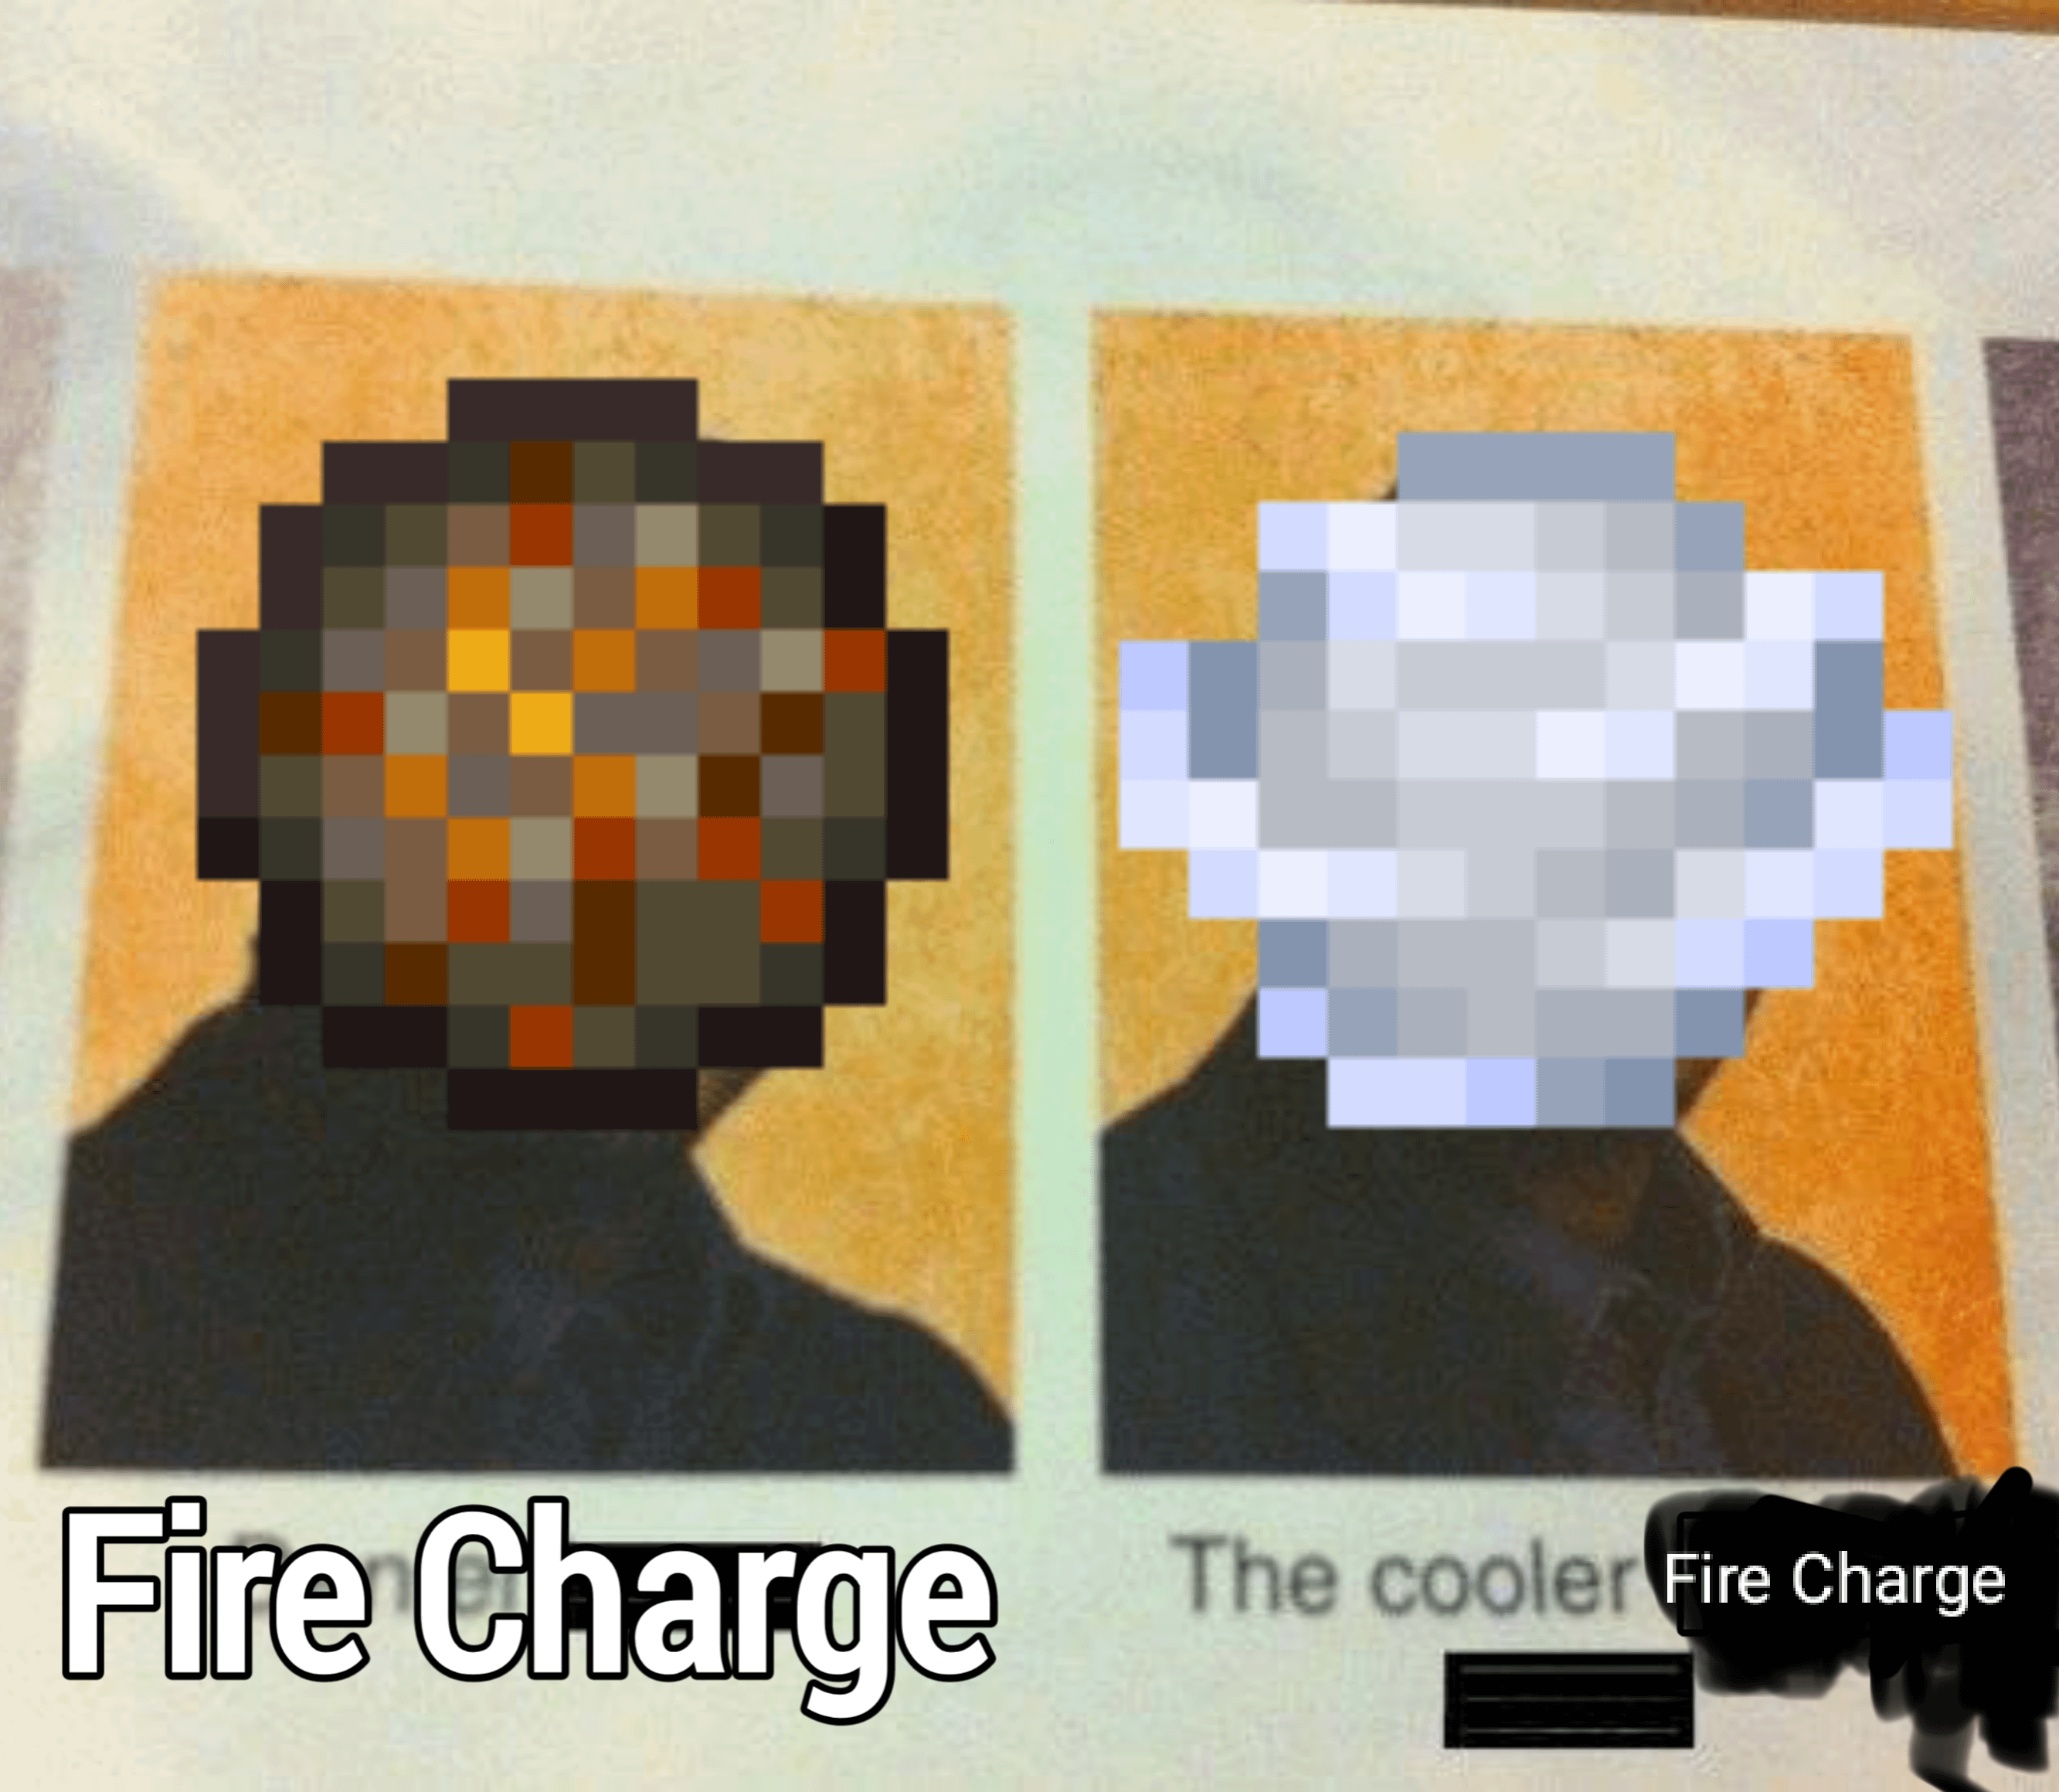 Minecraft Memes - "Literally Creeper"